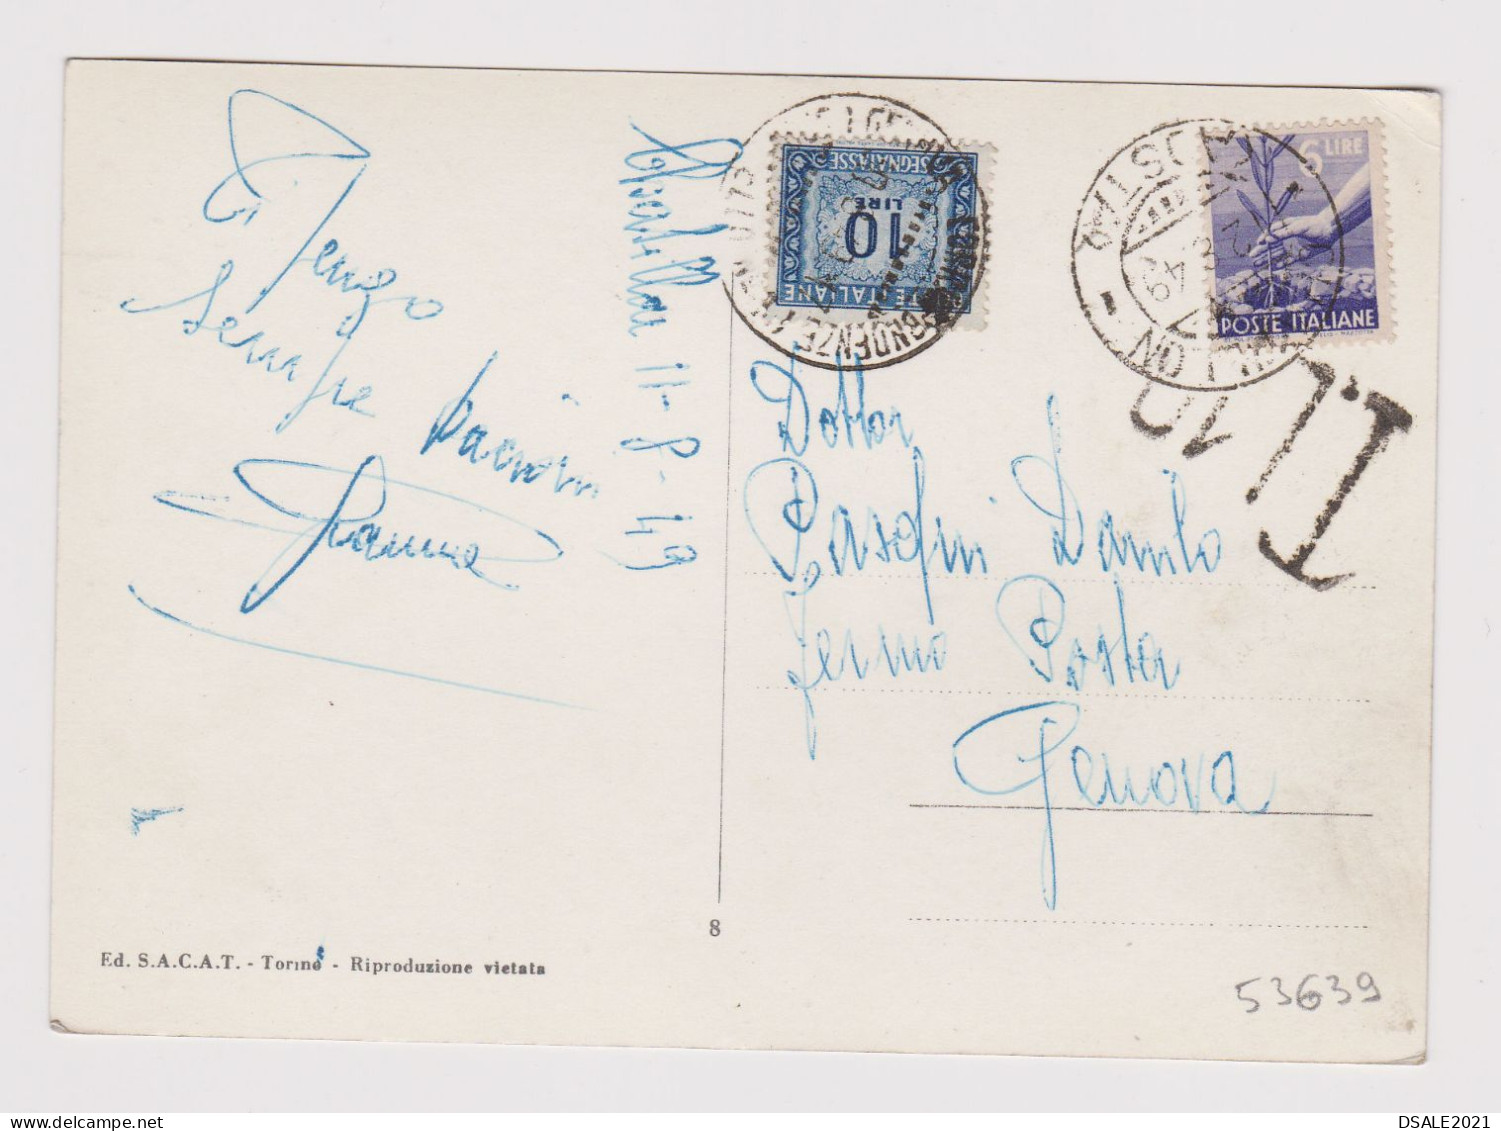 ITALY 1949 Pc W/6Lire Stamp AOSTA To GENOVA Postage Due 10Lire, Postcard St. VINCENT M.575 PIAZZALE DELLA FONTE /53639 - 1946-60: Poststempel